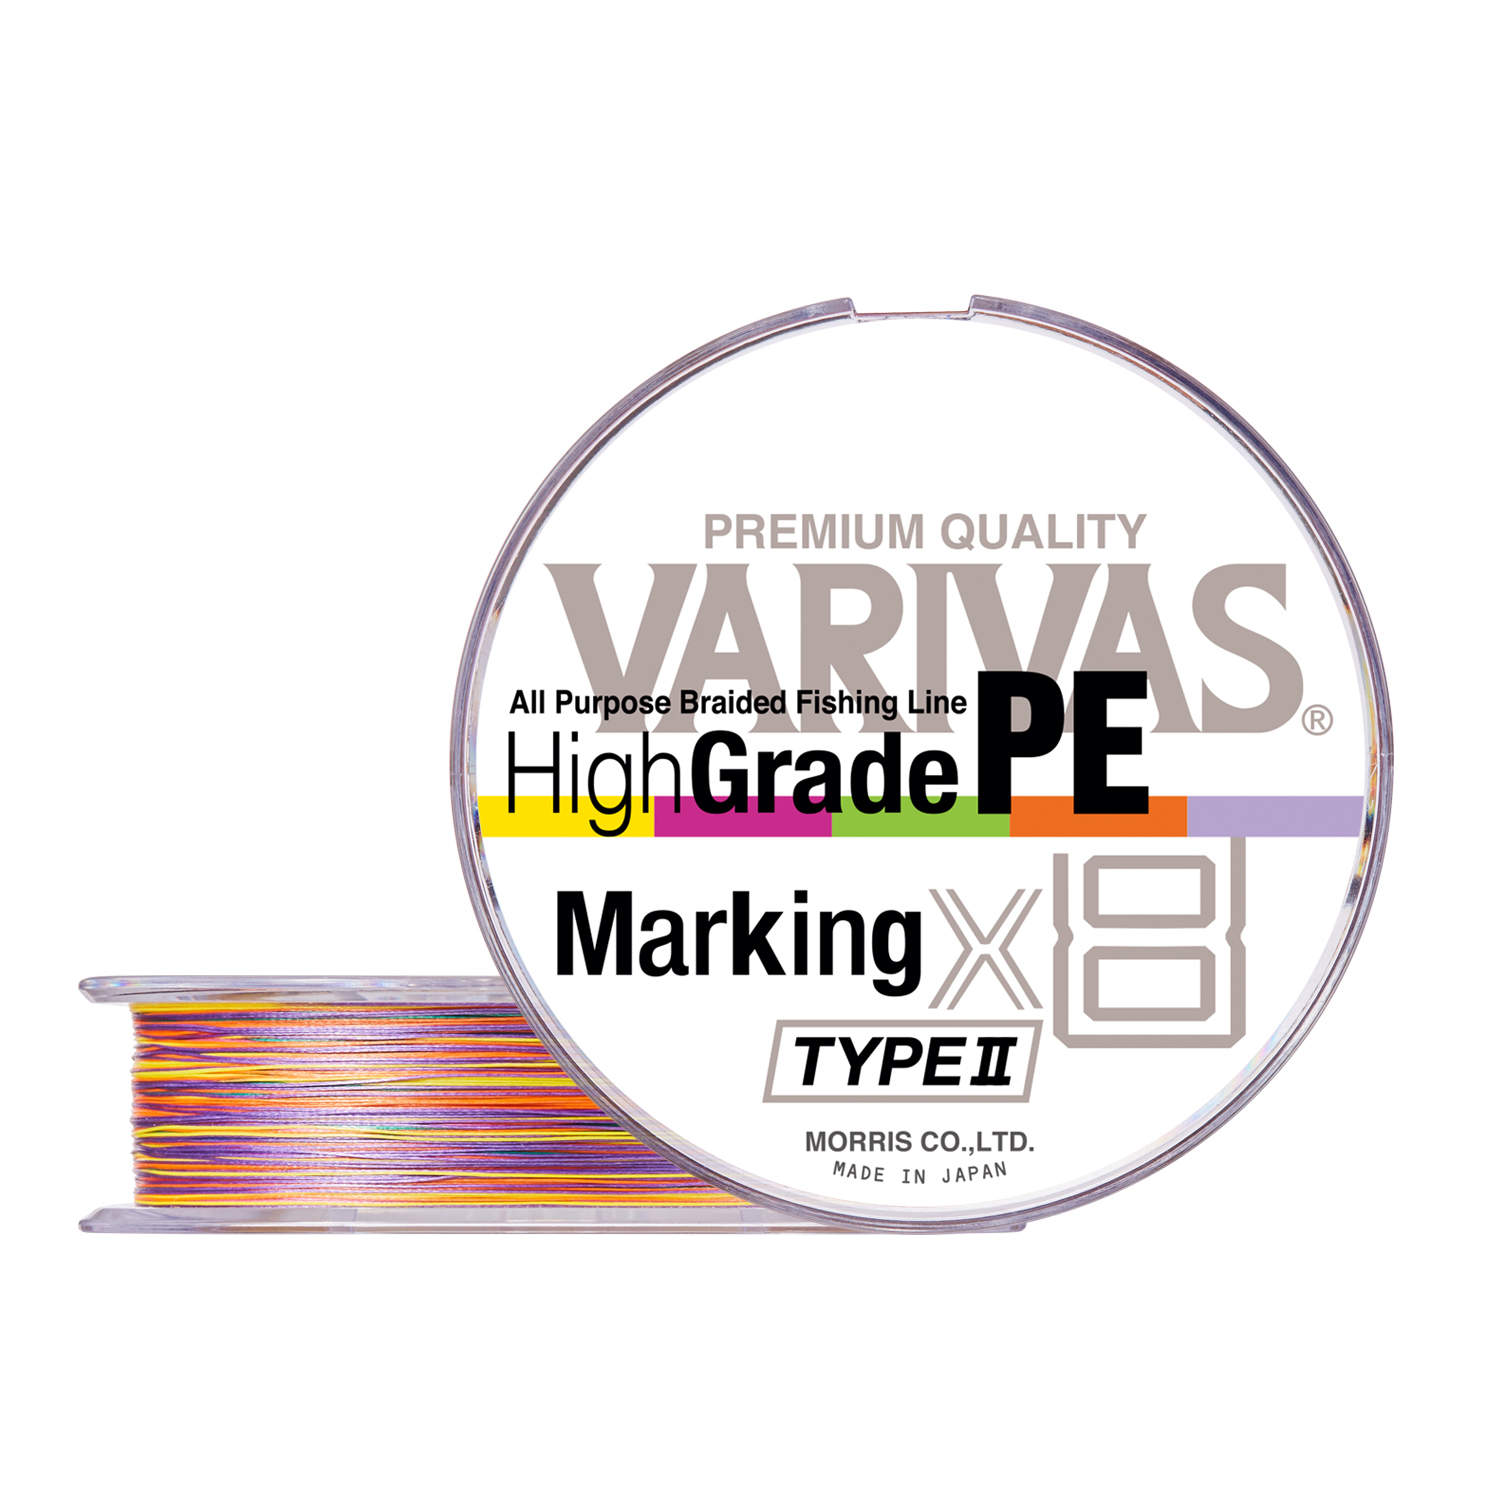 VARIVAS High Grade PE Marking Type2 X8 31lb 0.205mm 150m PE1.5